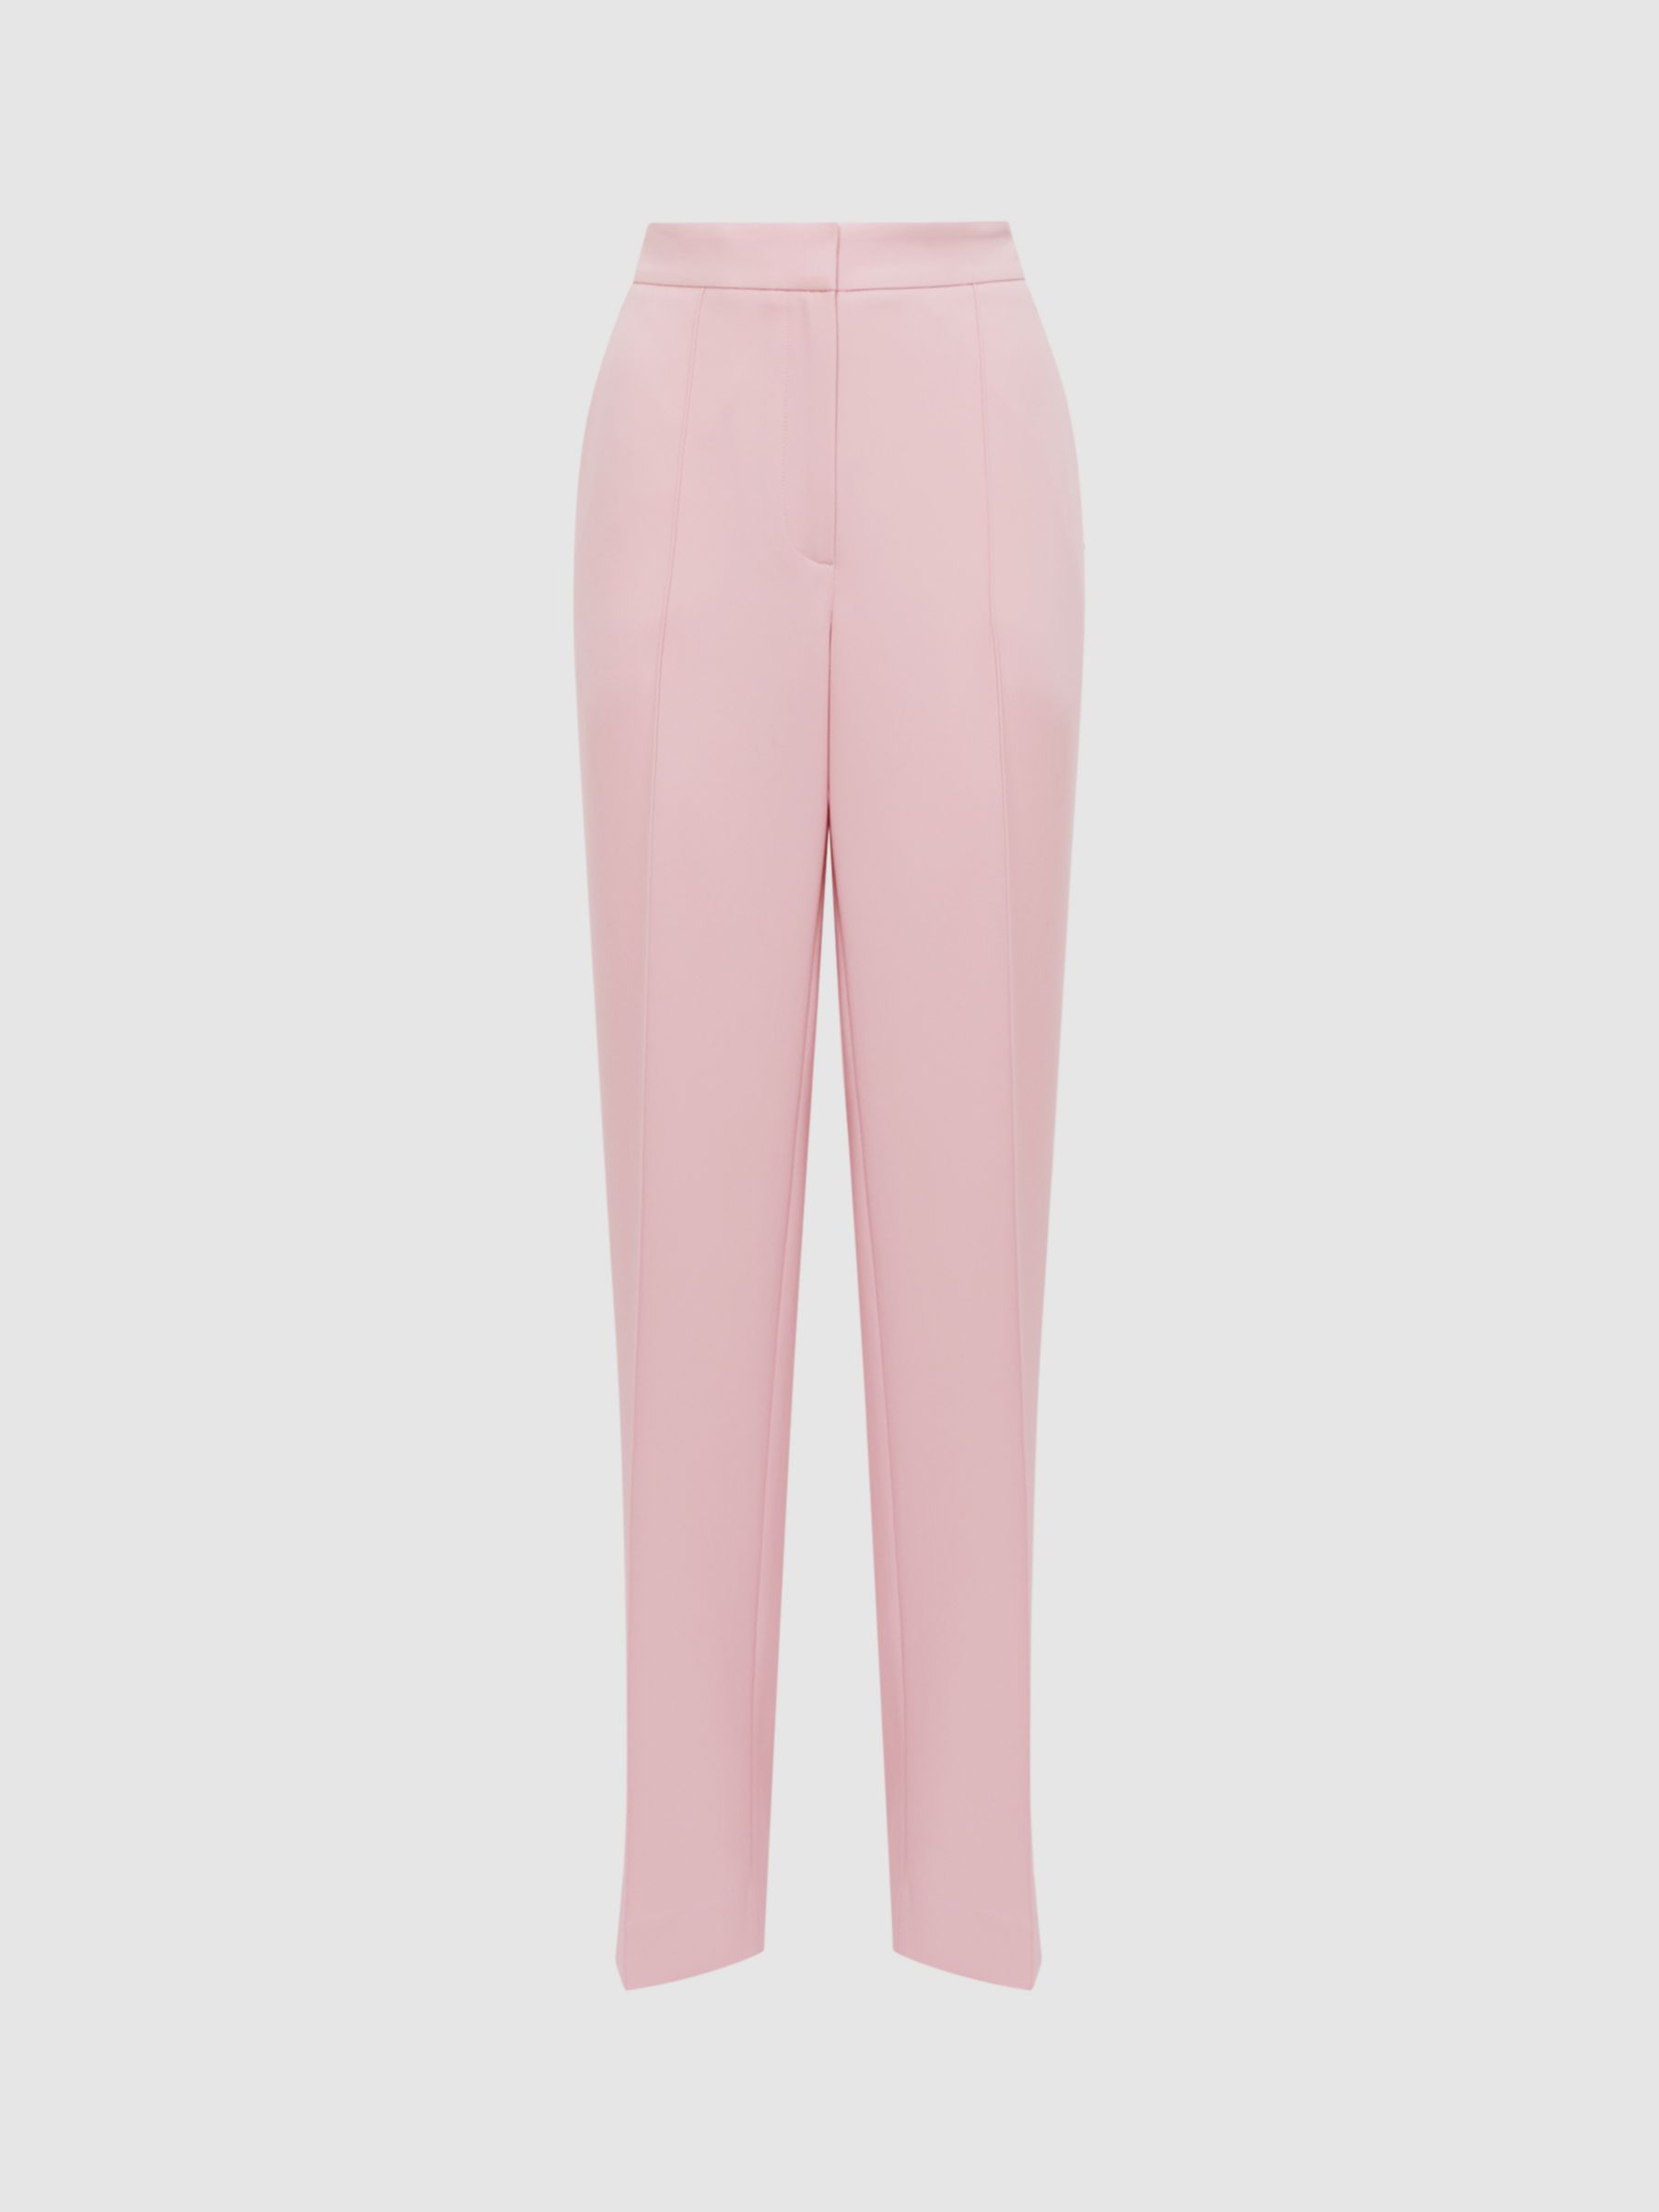 Reiss Marina Wide Leg Trousers, Pink, 6